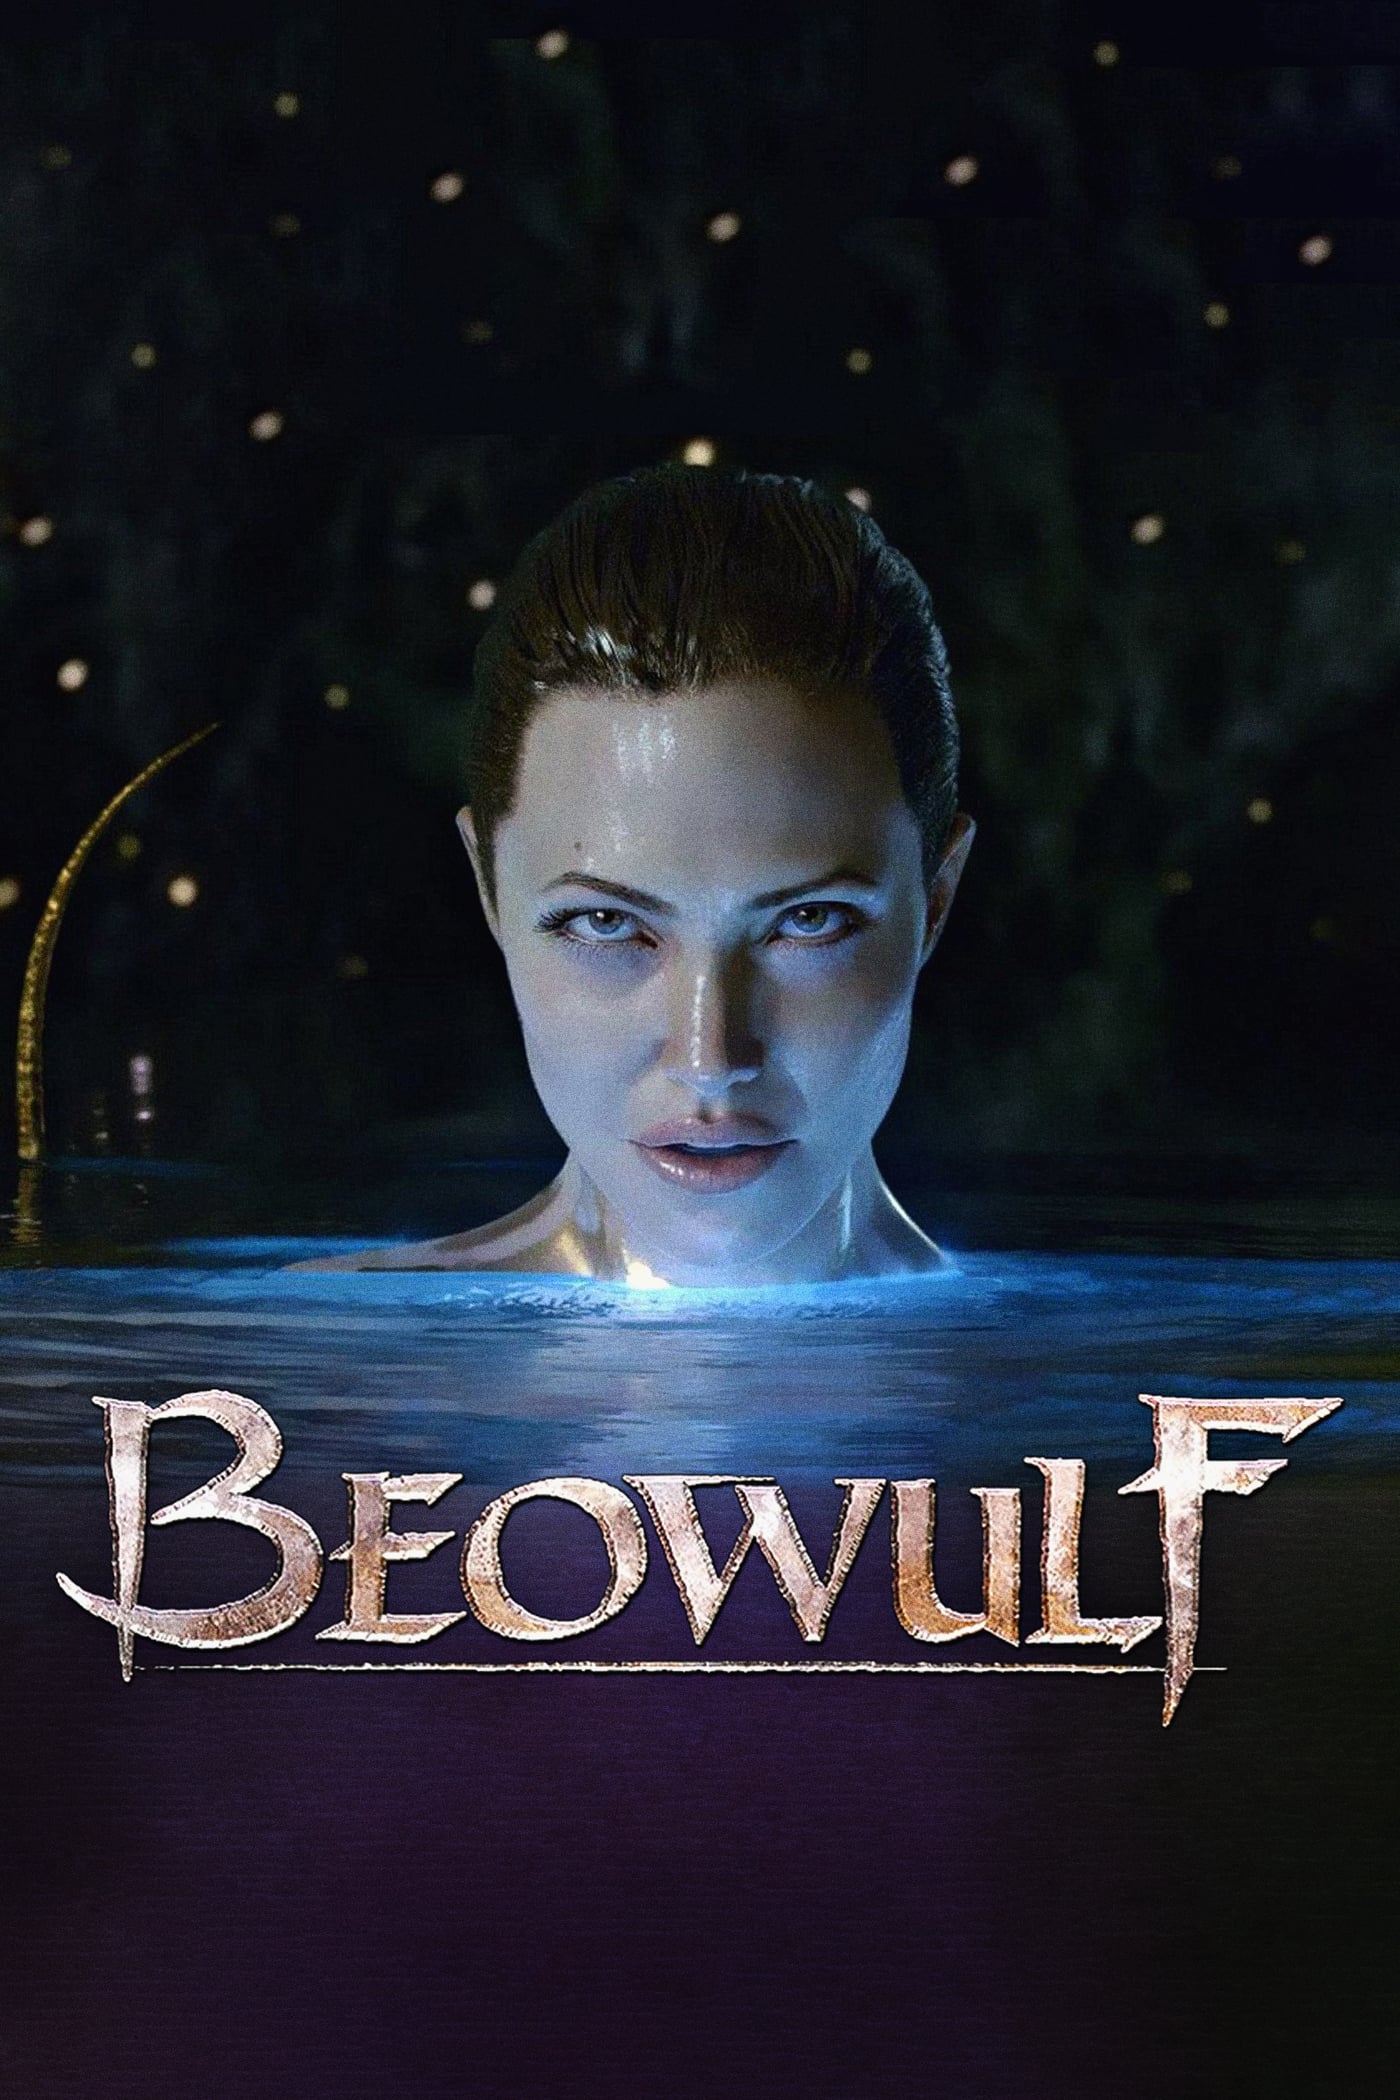 beowulf movie 2007